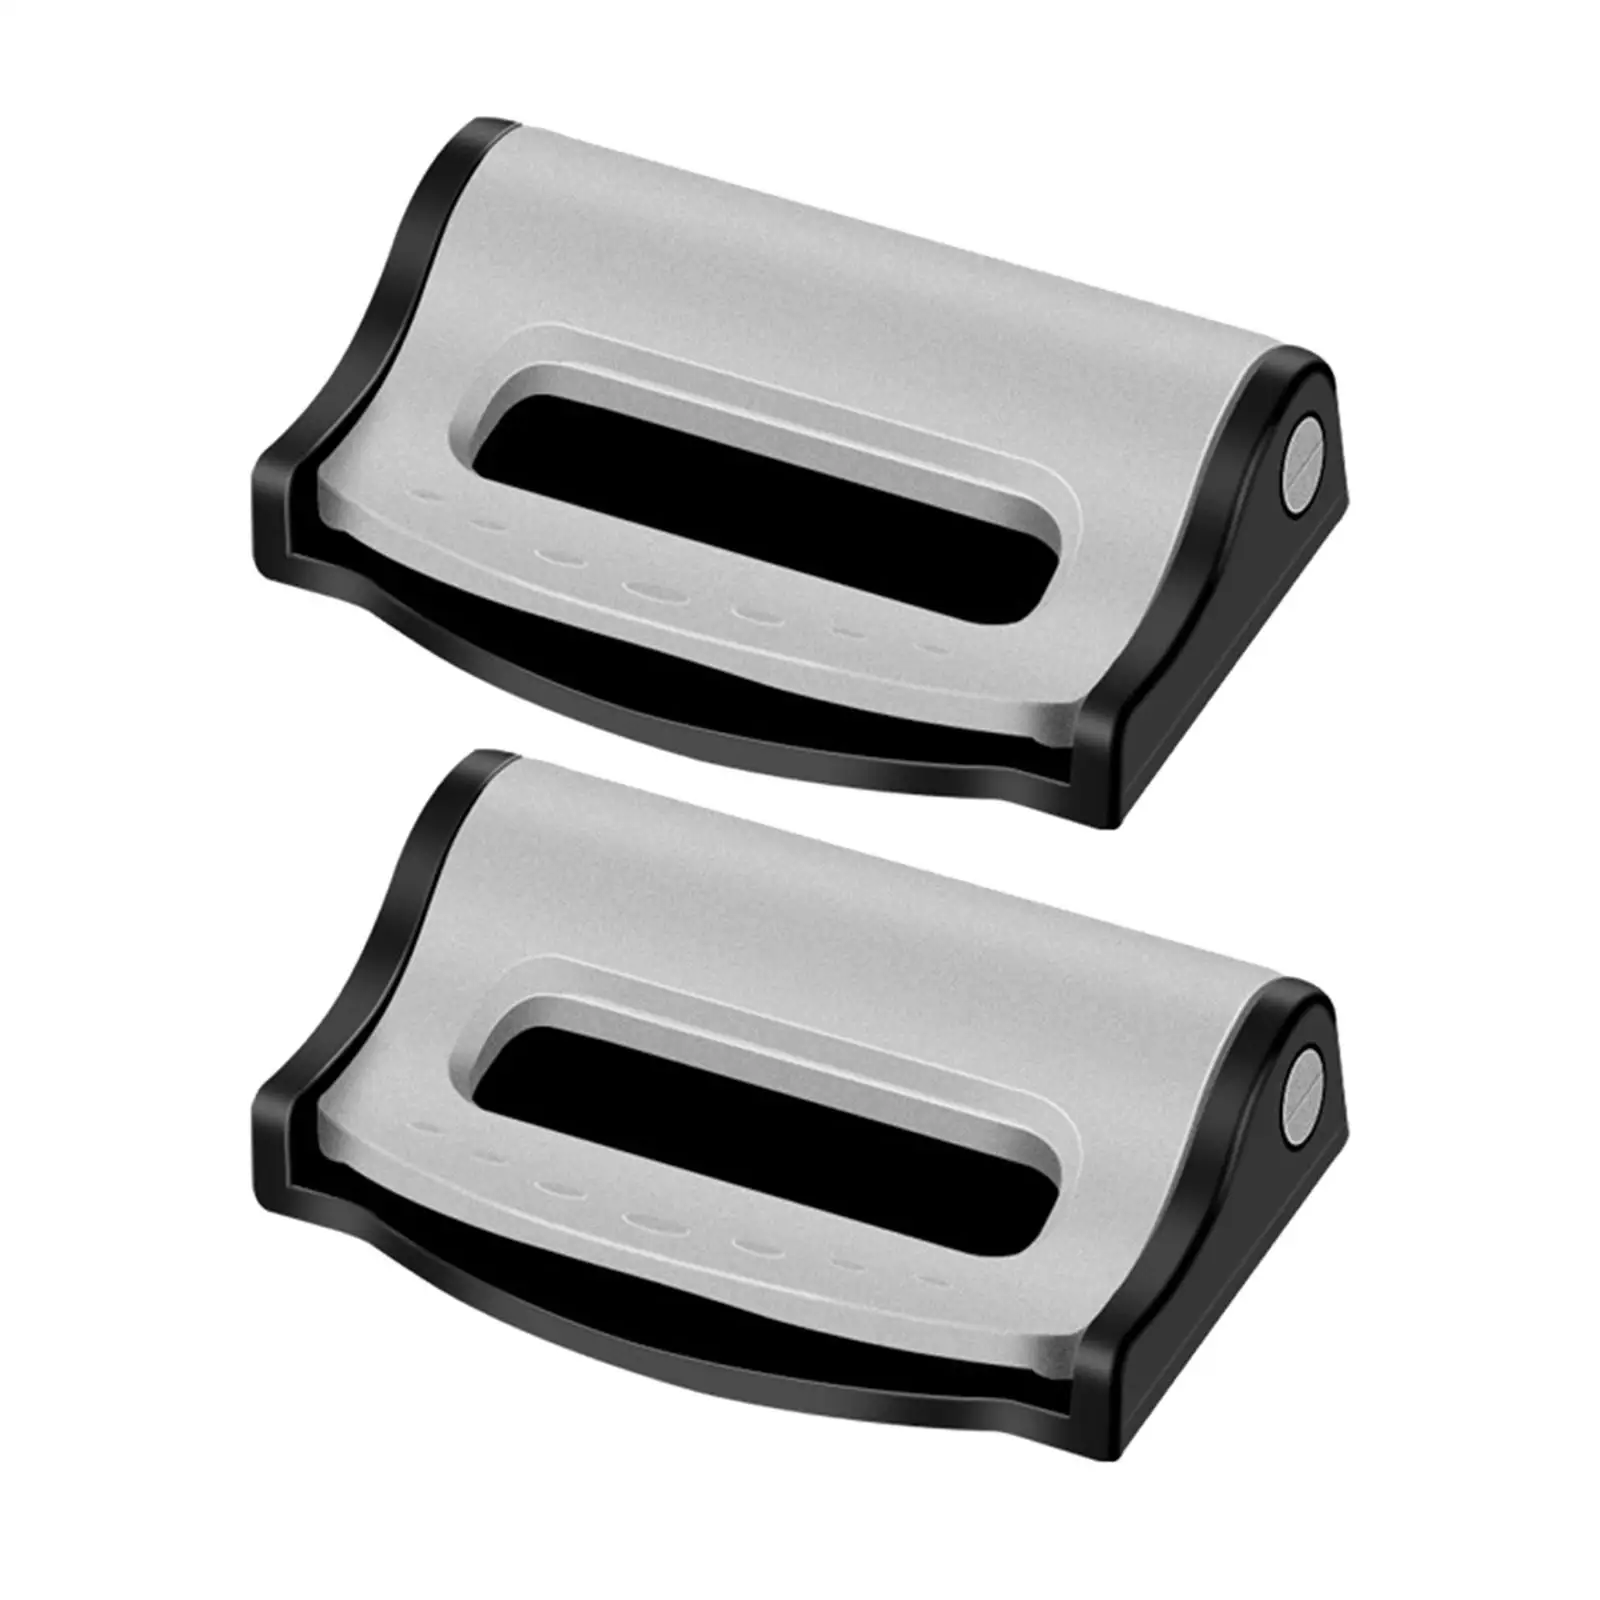 2 Pieces Car Automobile Seat Safety Belt belt clip Adjuster Comfortable Adjustable Locking Buckles Auto Parts Wear Resistant